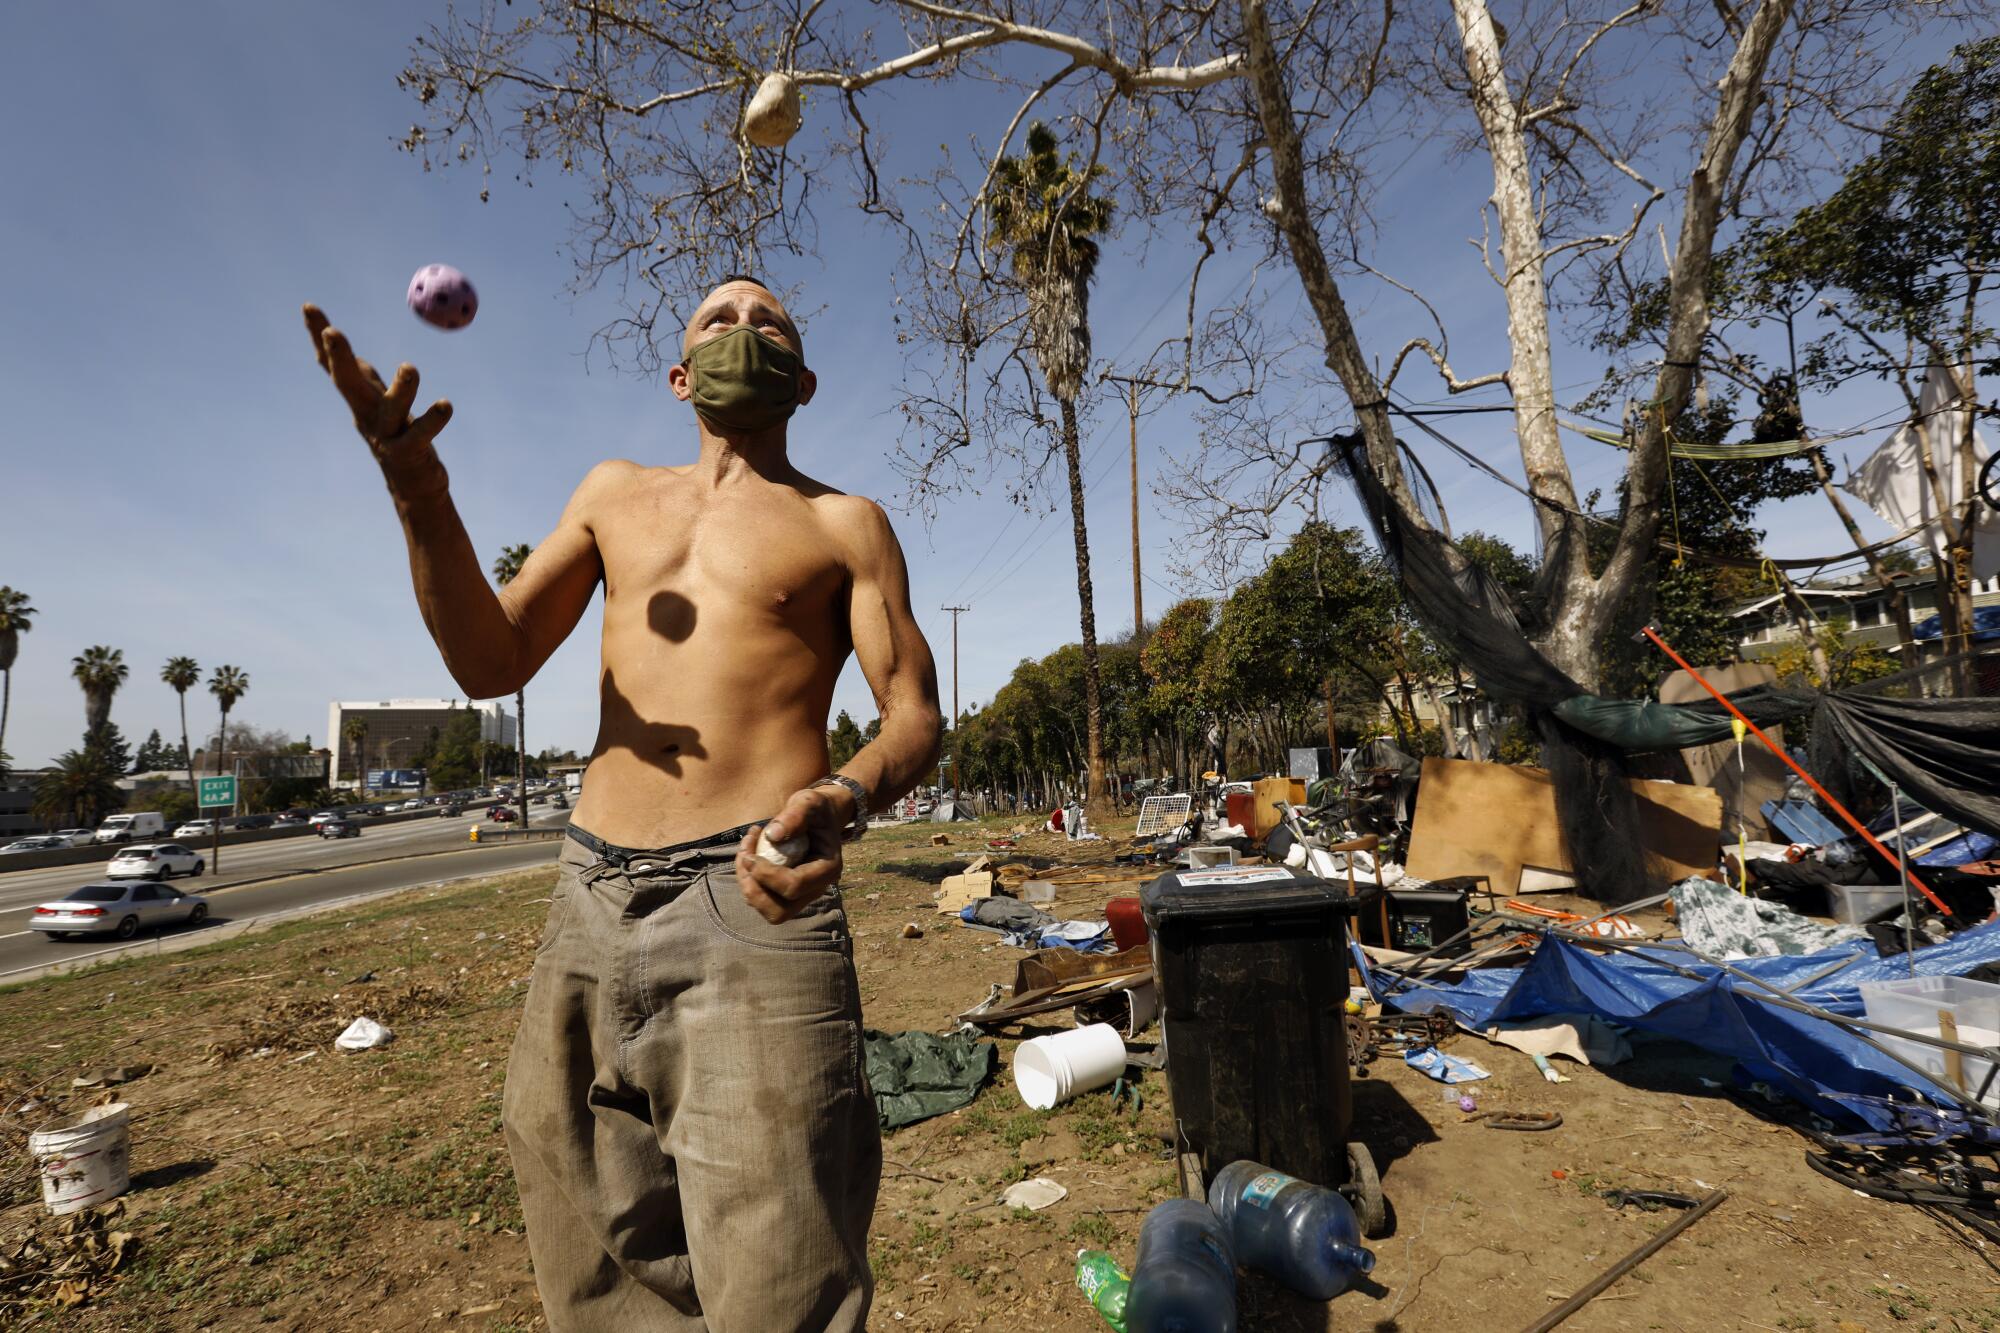 A shirtless man juggles near the freeway.